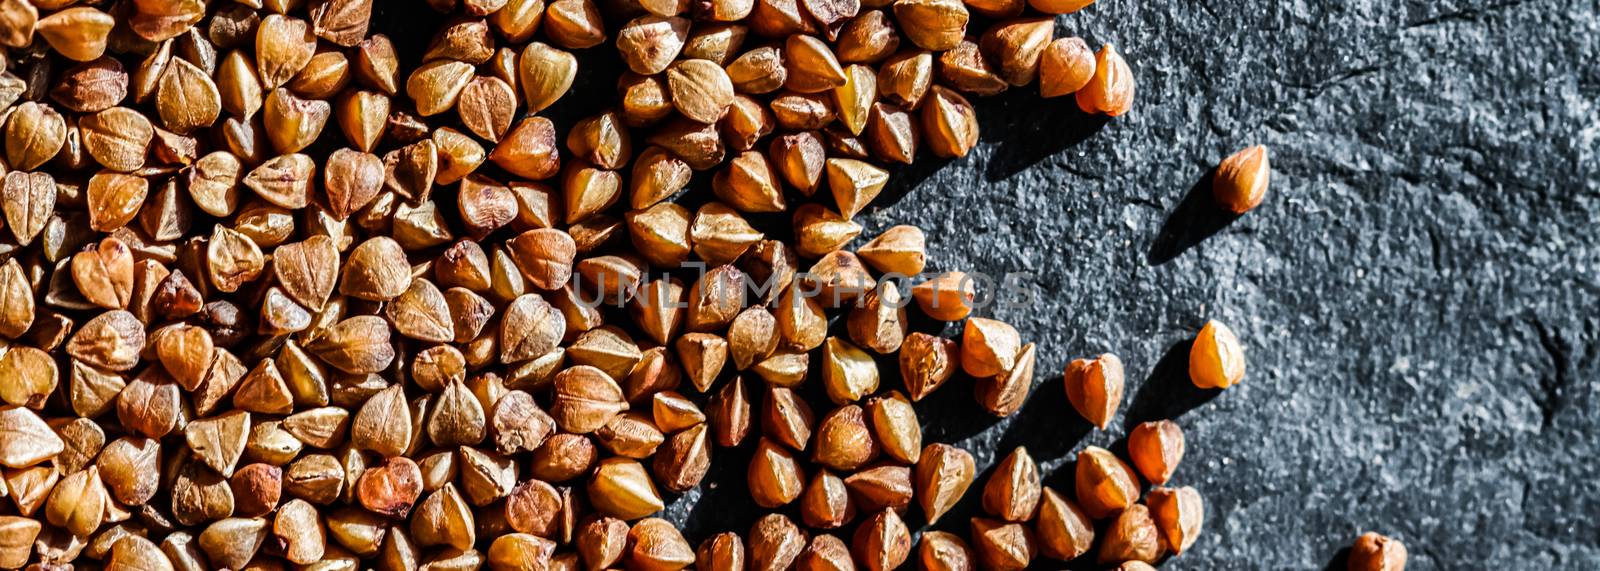 Buckwheat grain closeup, food texture and cook book backgrounds